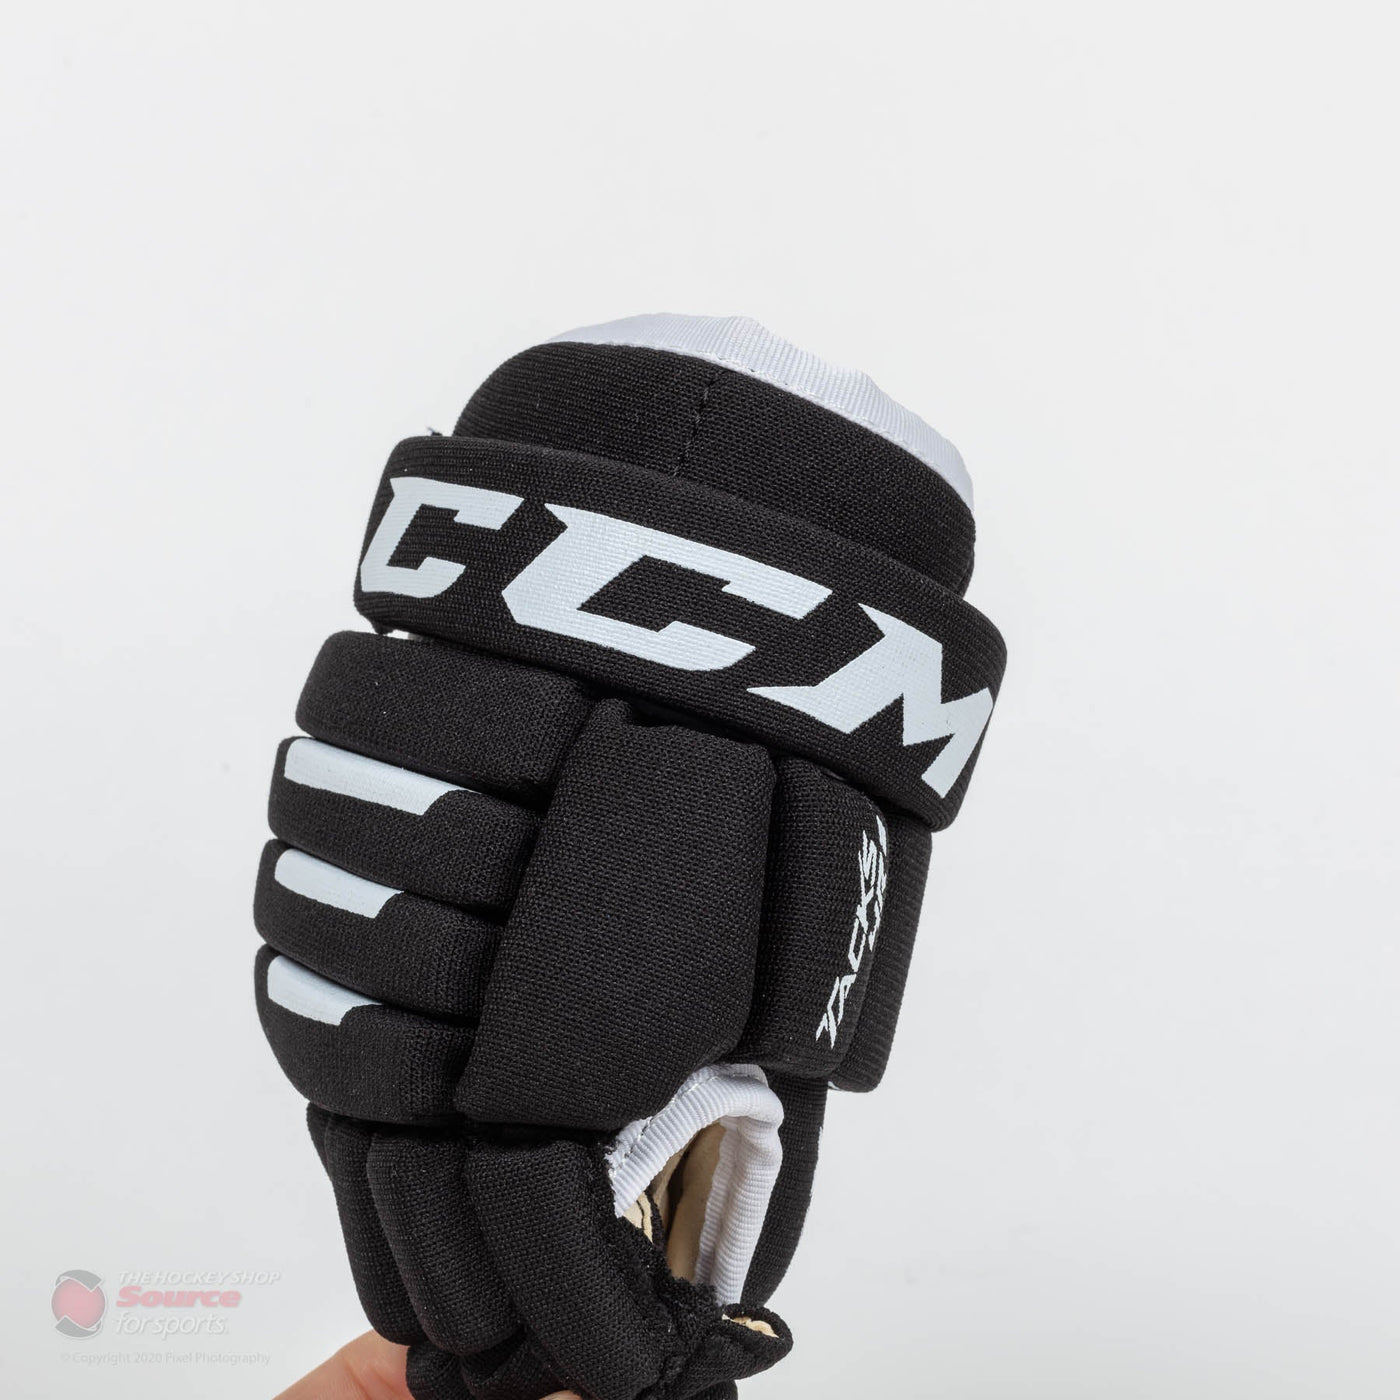 CCM Tacks 4R² Youth Hockey Gloves